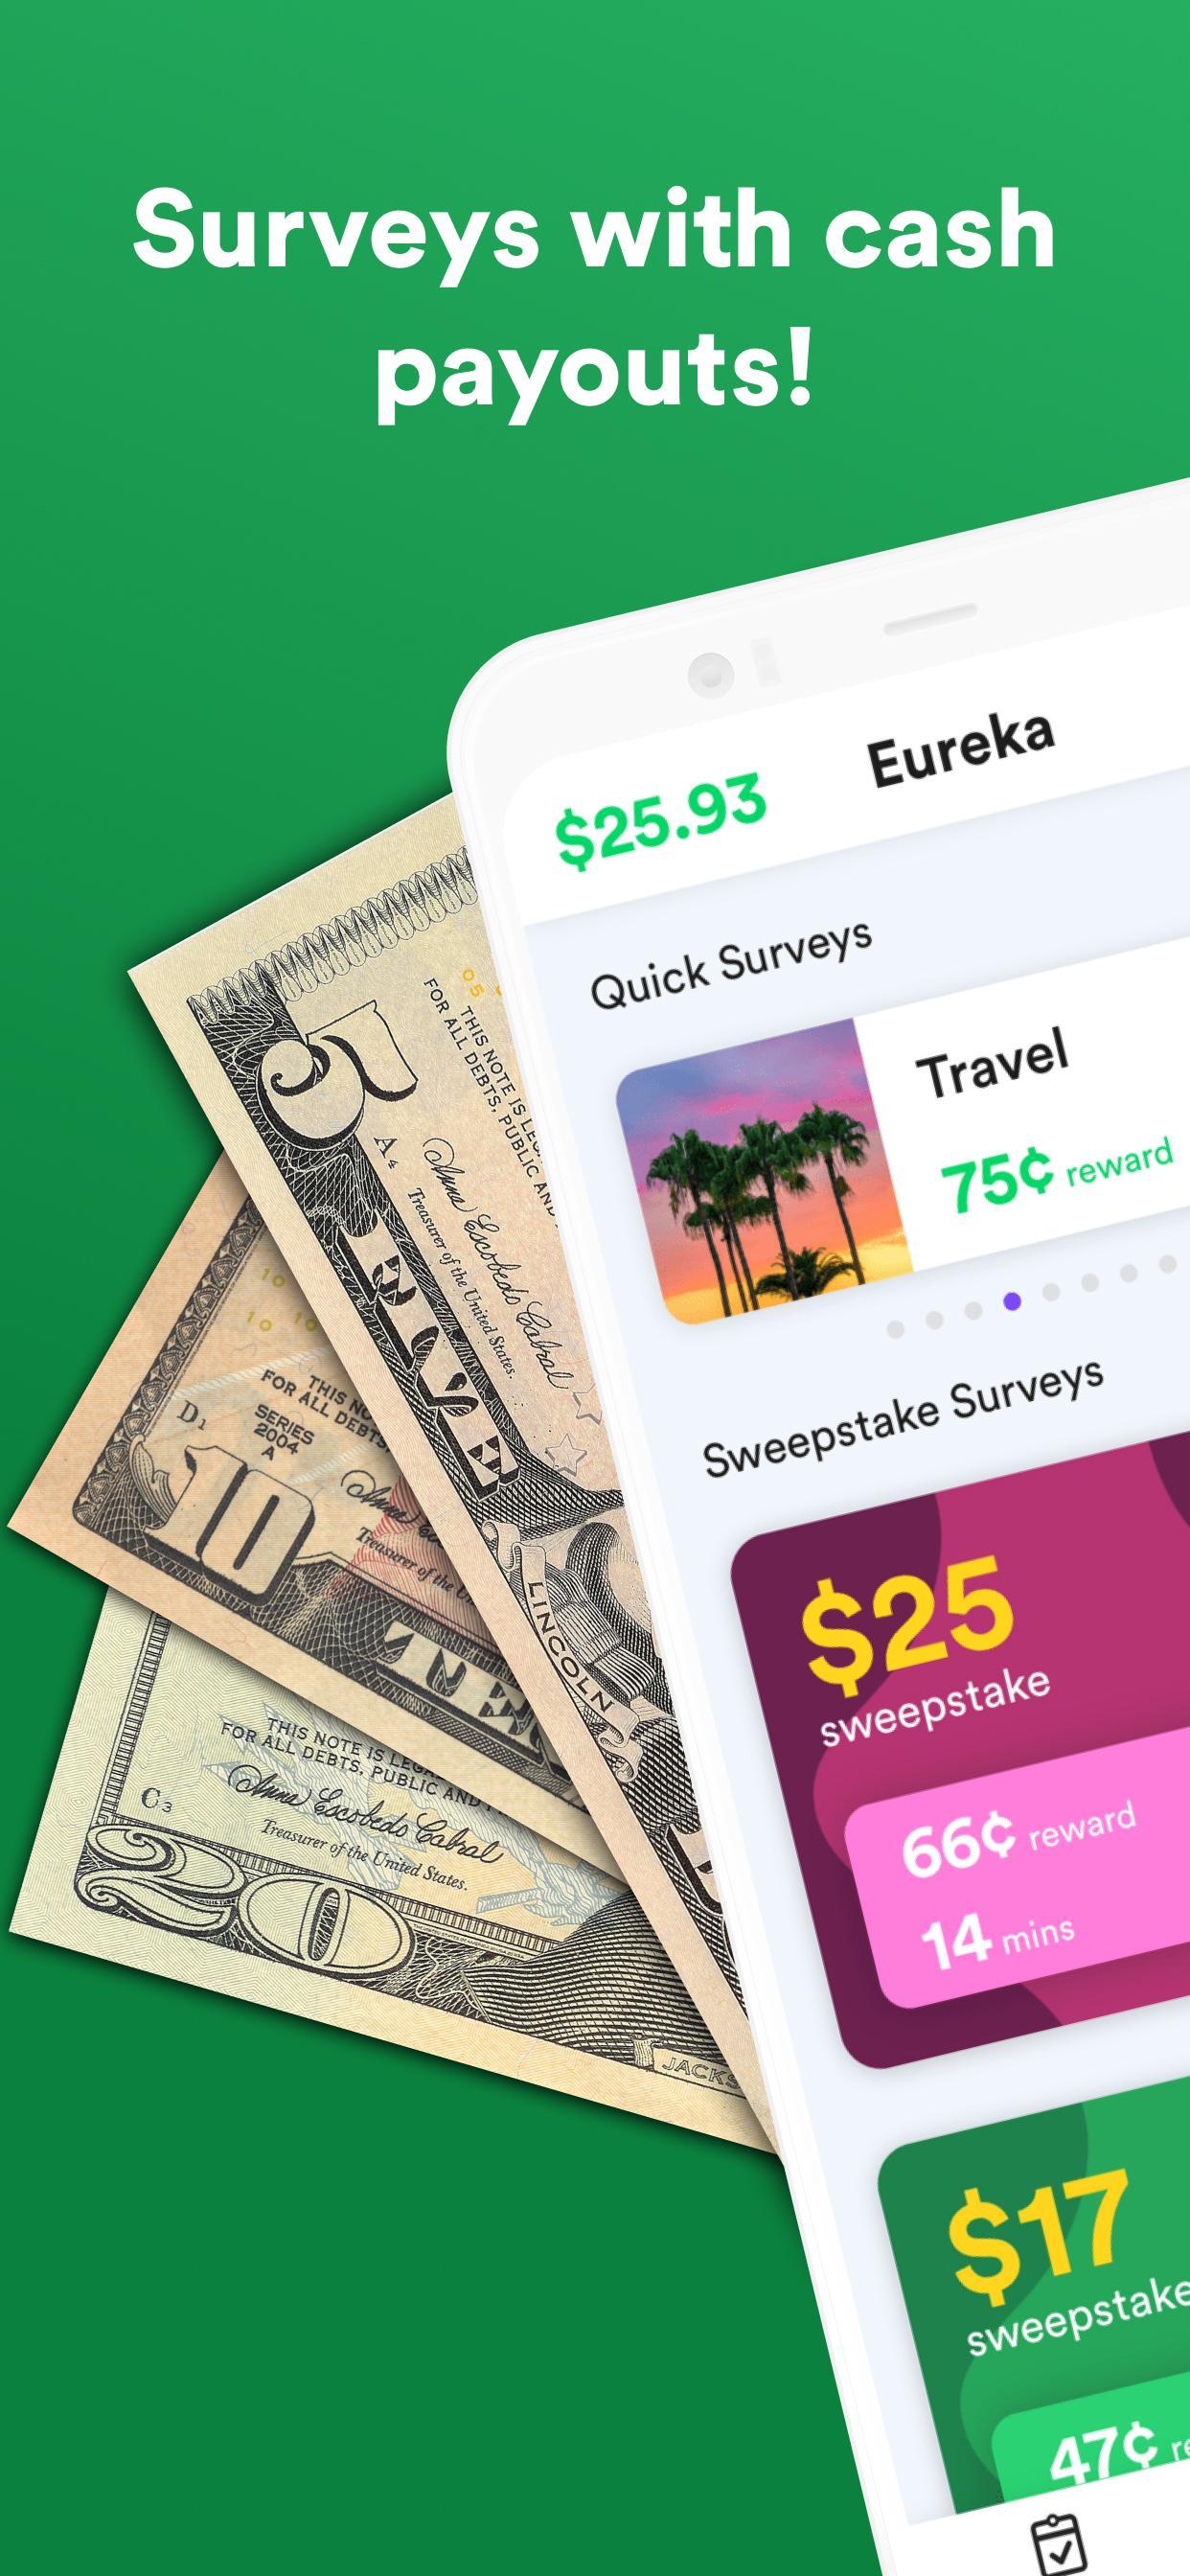 Eureka: Make money via surveys, get paid cash!